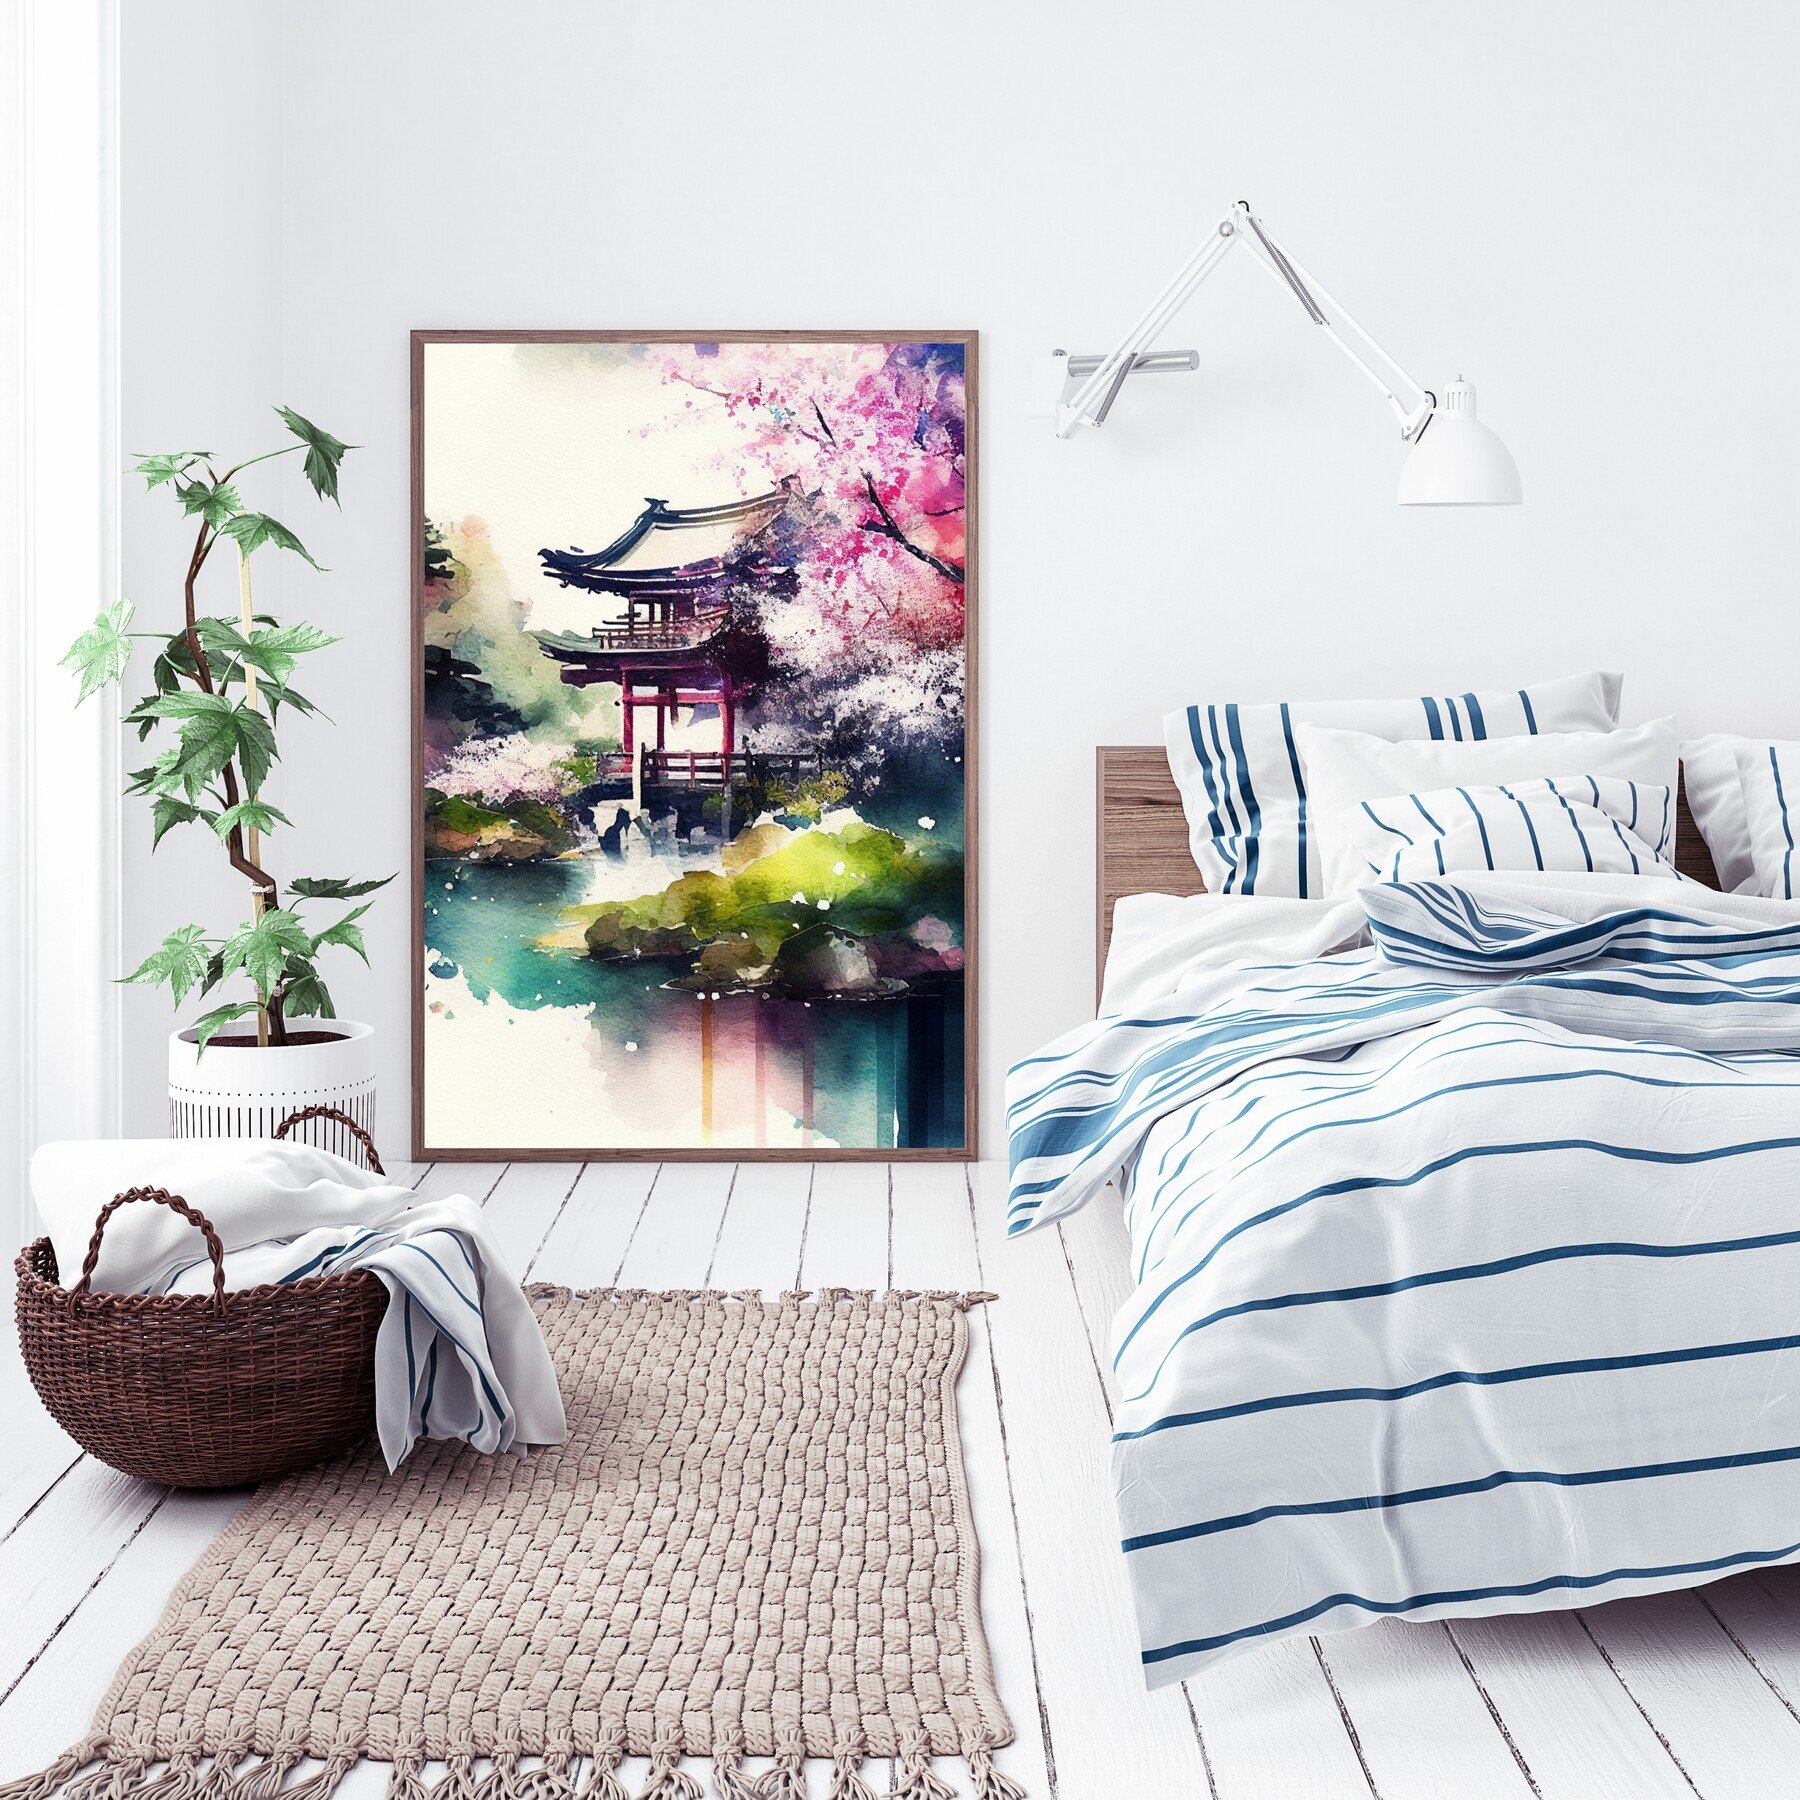 ArtStation - Japan art prints, Landscape Pagoda Printable art, Asian ...